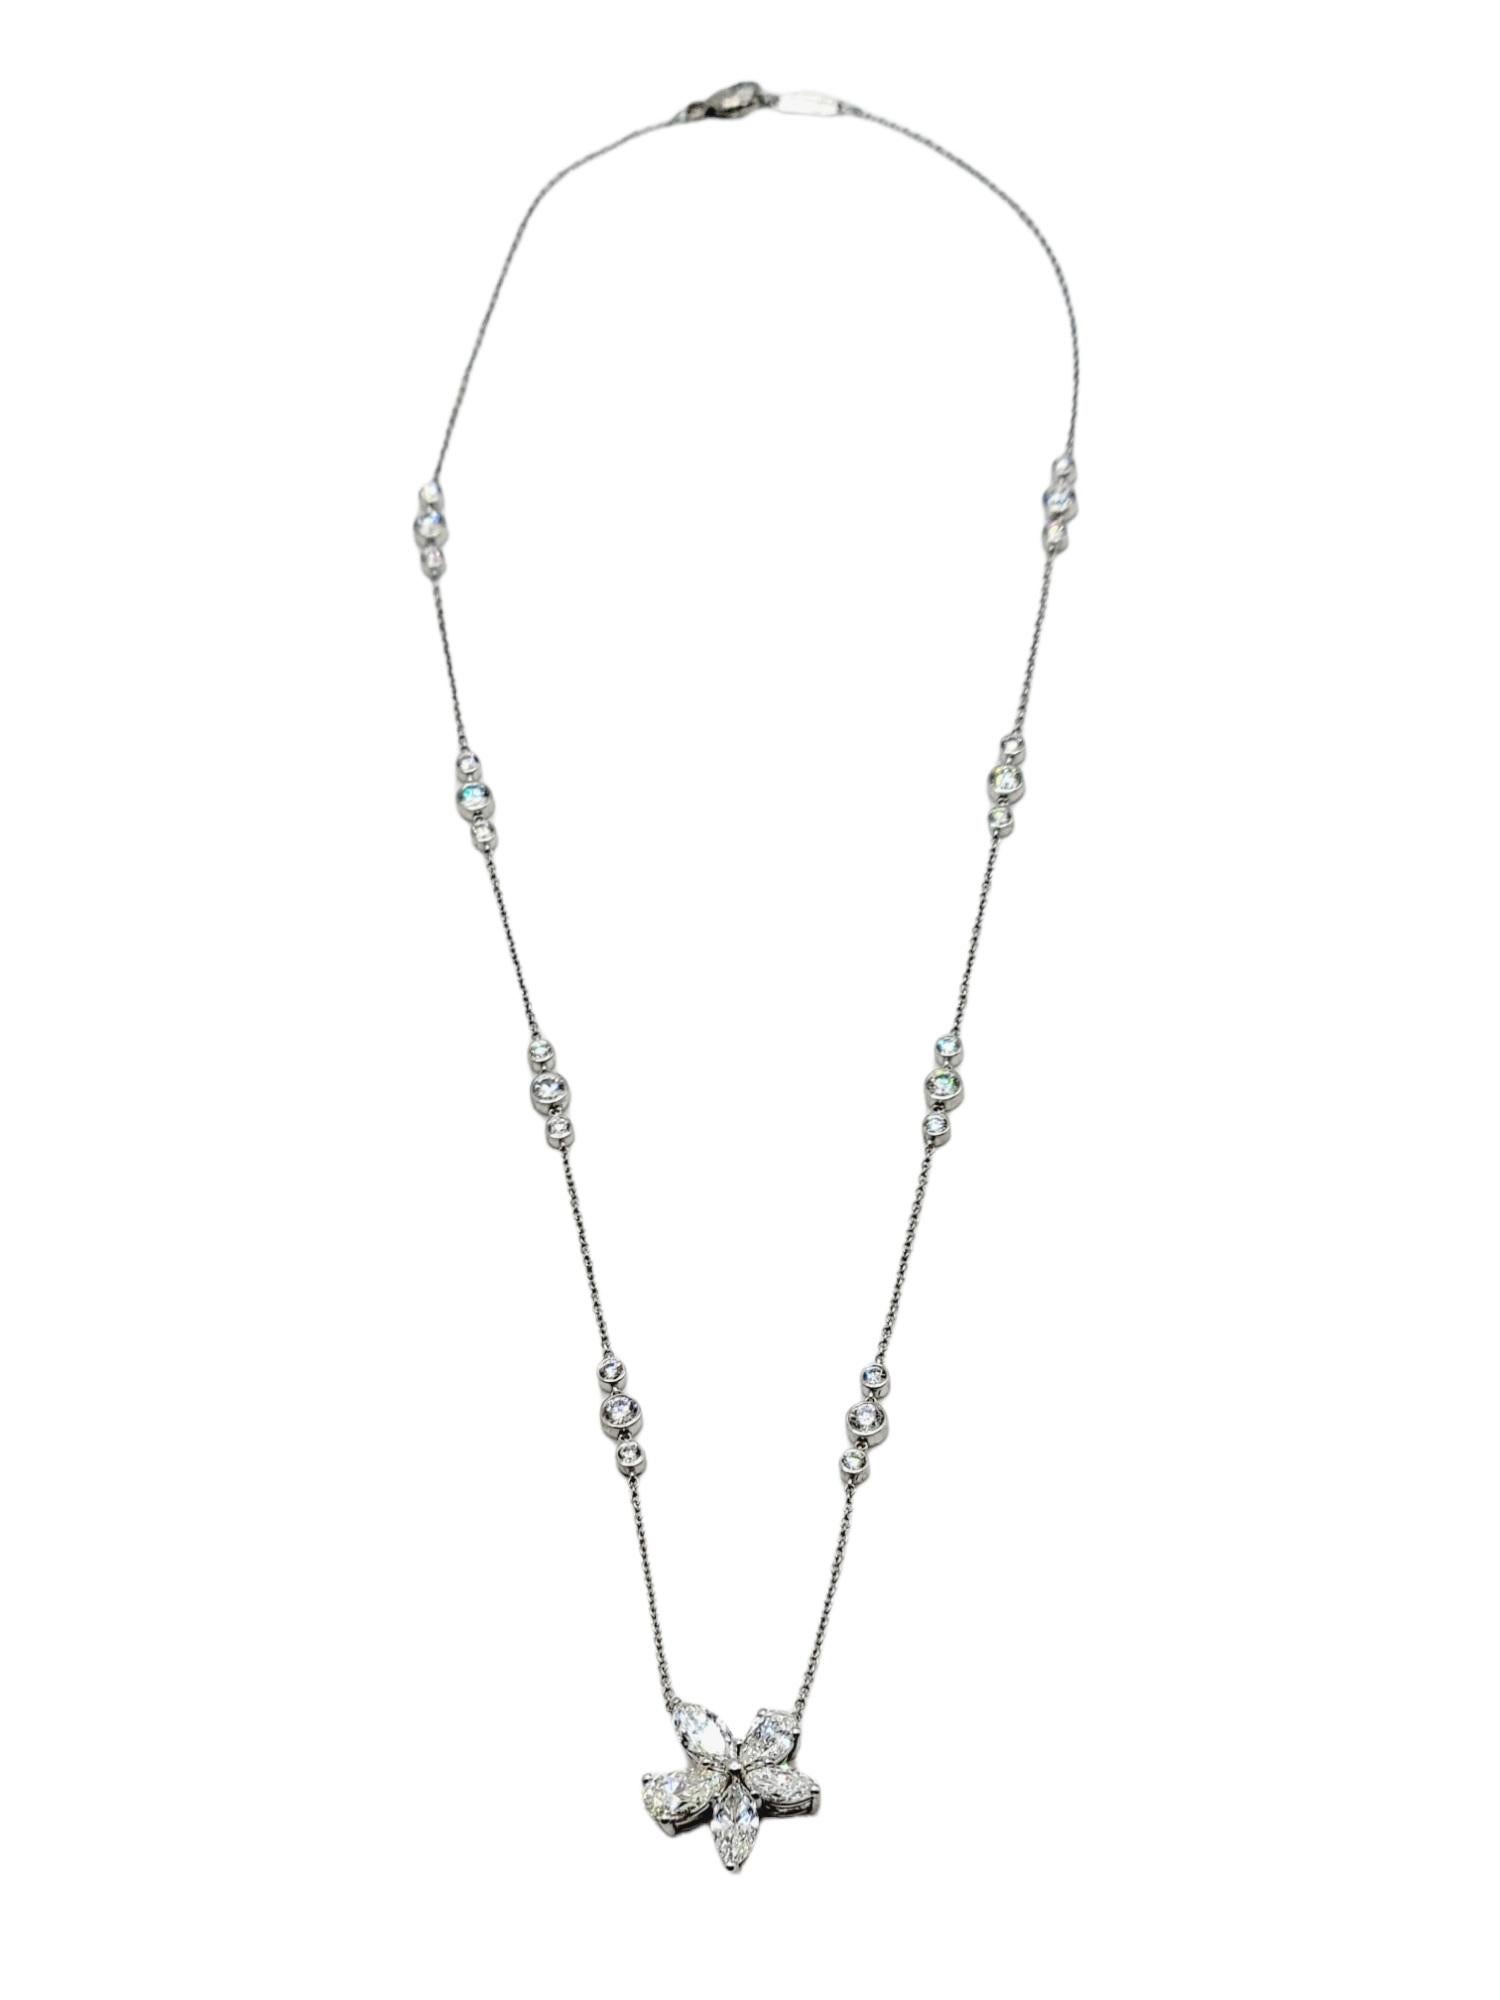 Tiffany & Co. Victoria Diamond Pendant Necklace in Platinum Extra Large, Station 5